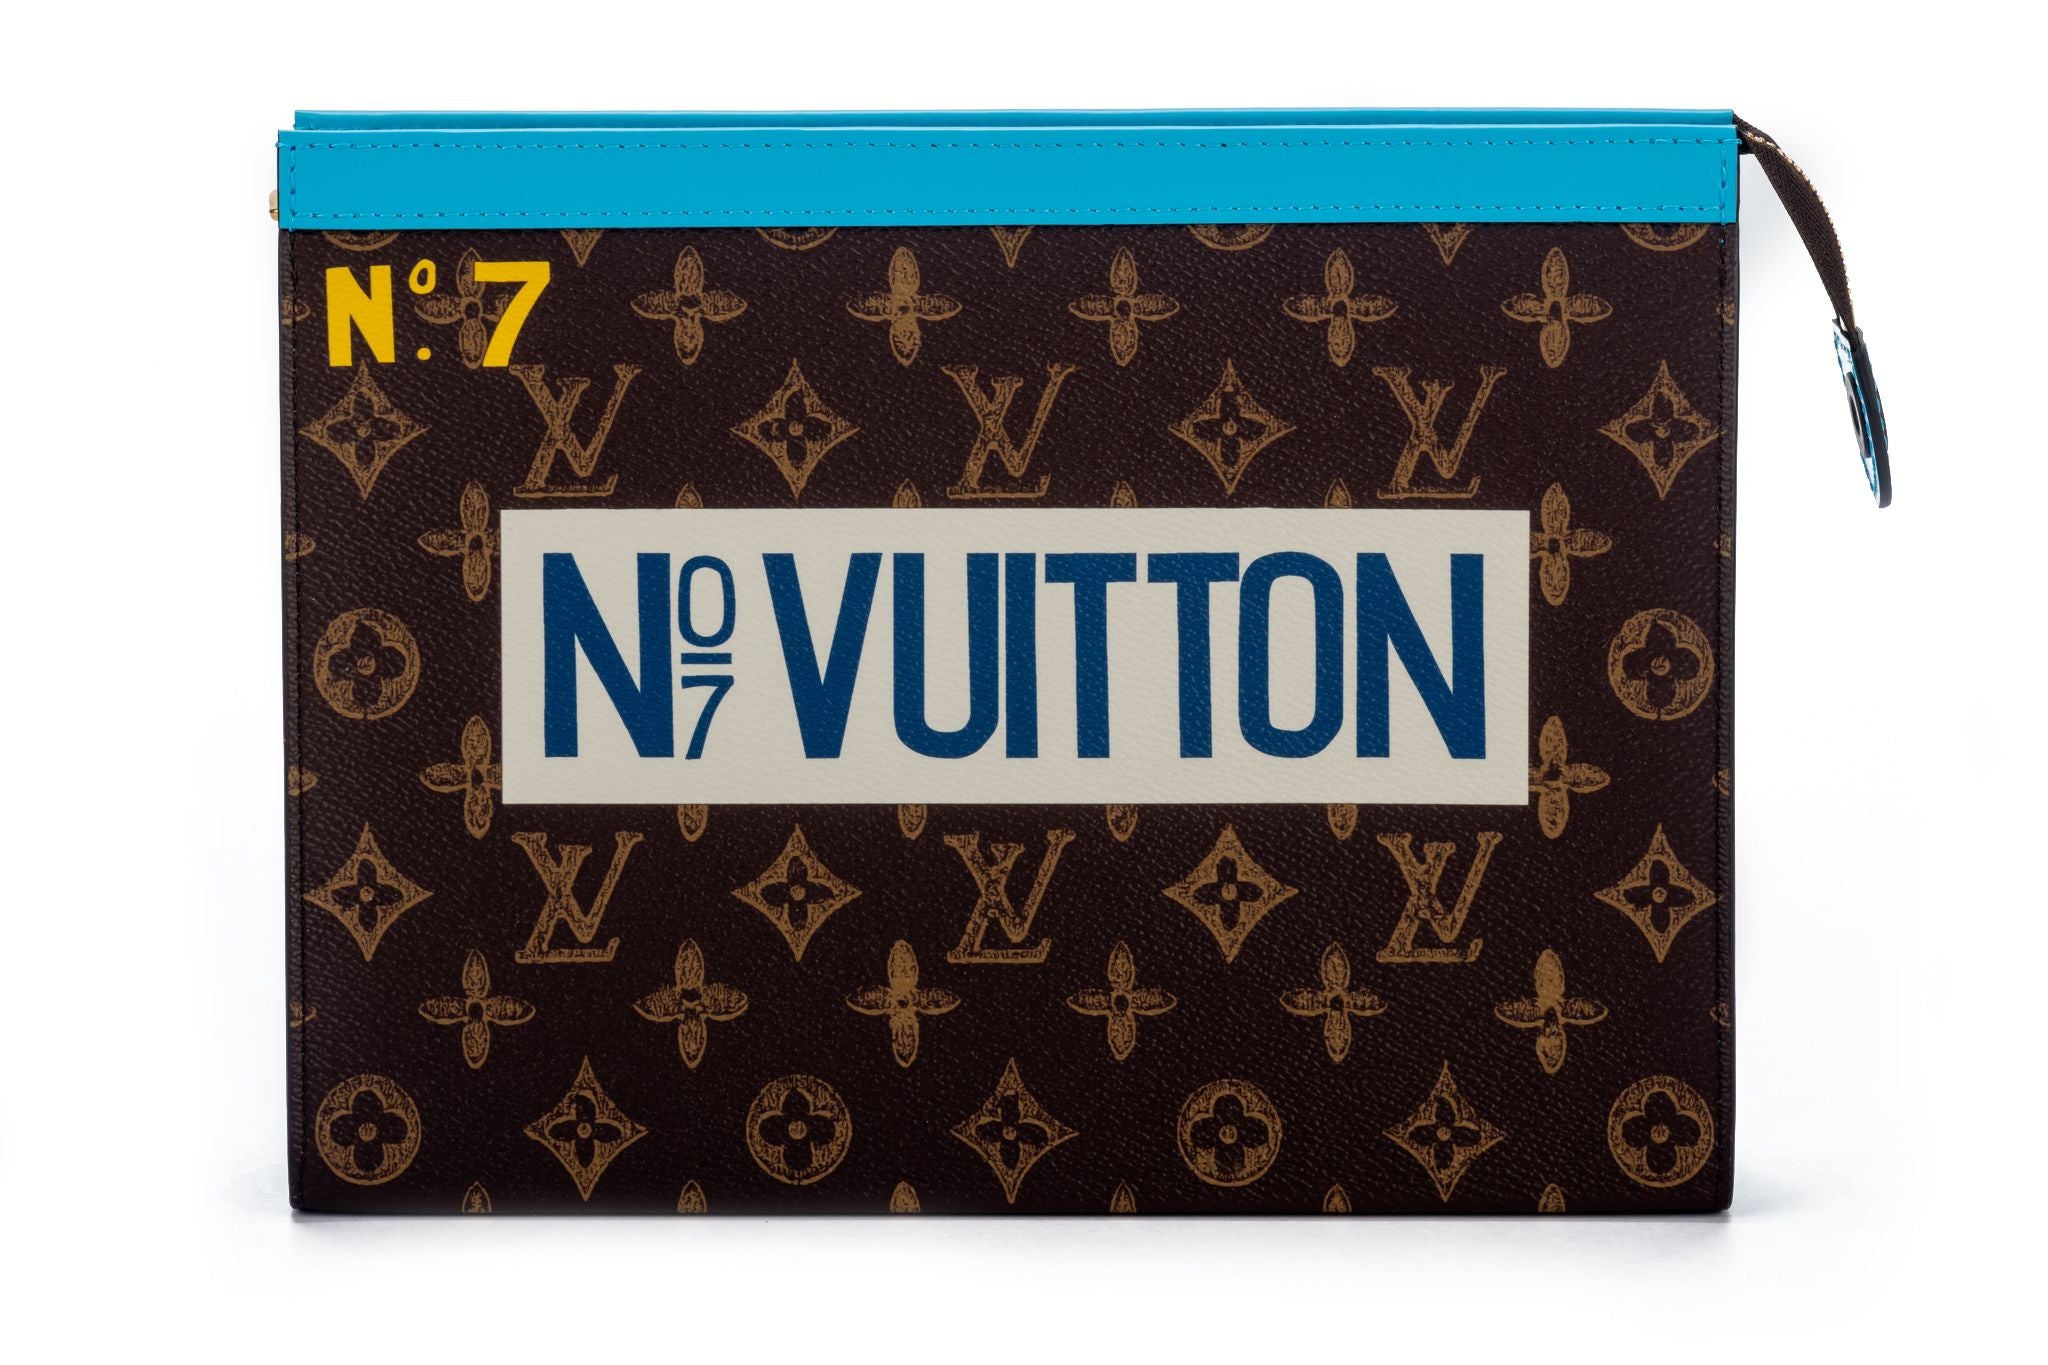 Louis VUITTON BOX POUCH BAG CHARM Abloh Virgil Limited New